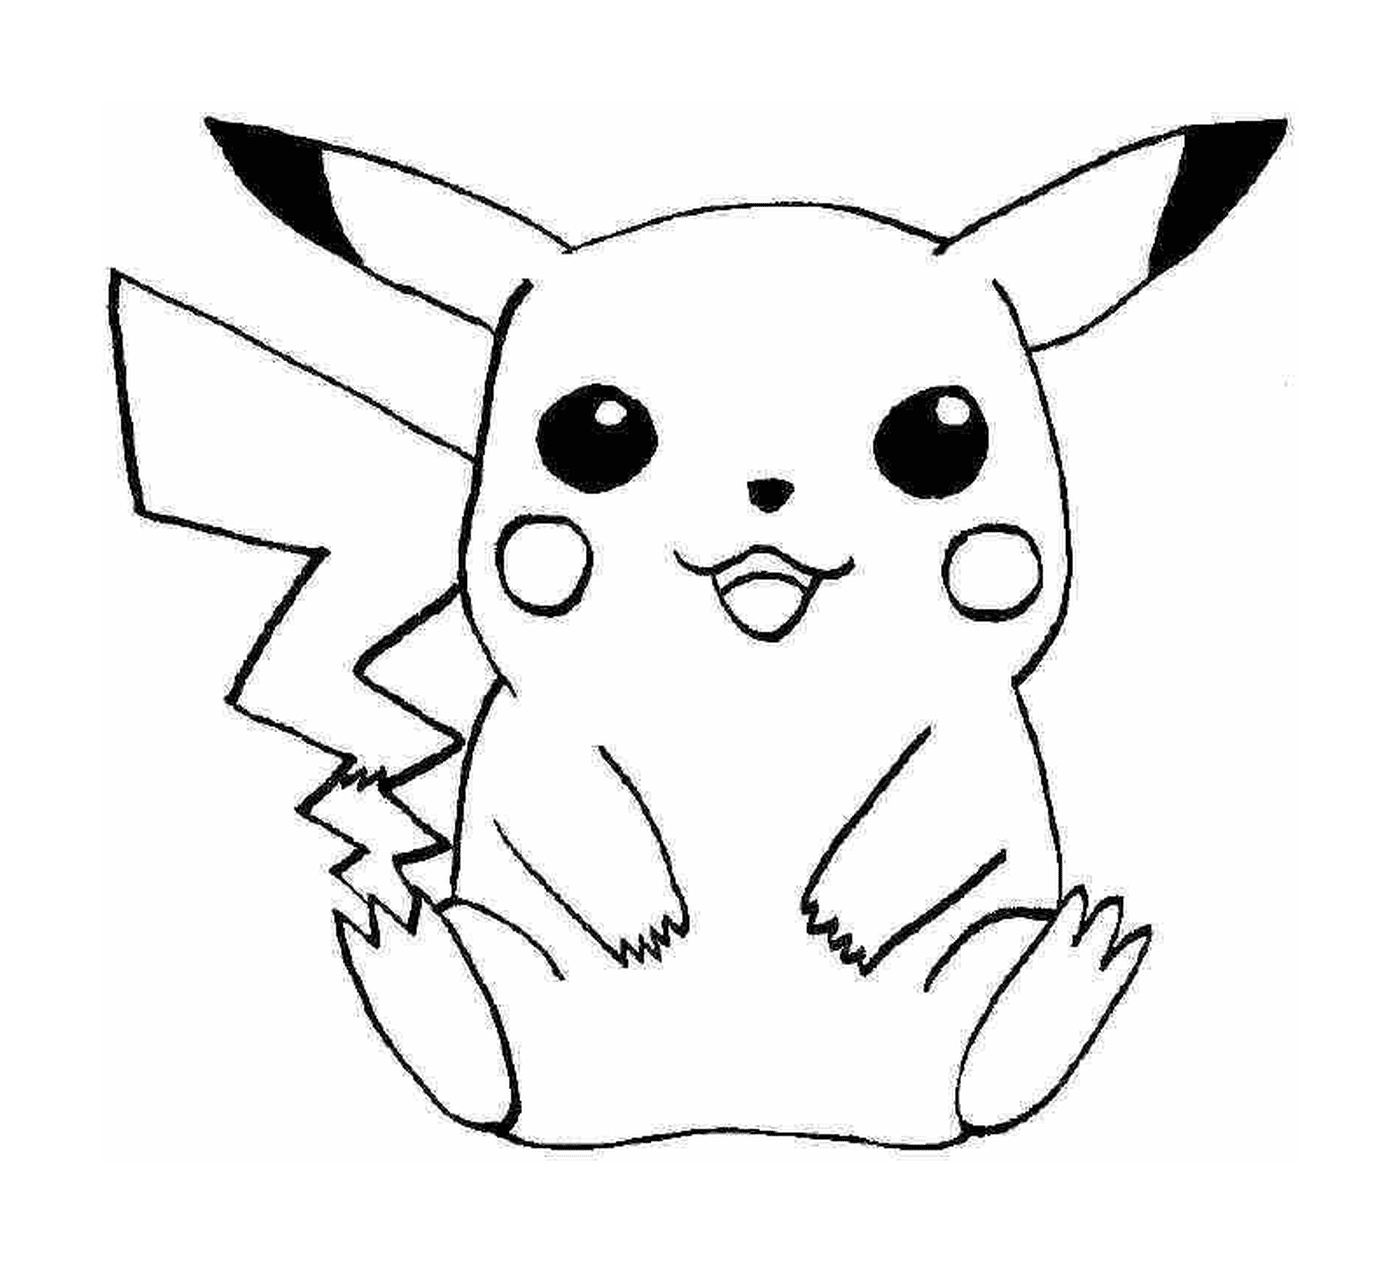  Pikachu, simbolo di adorabilità 